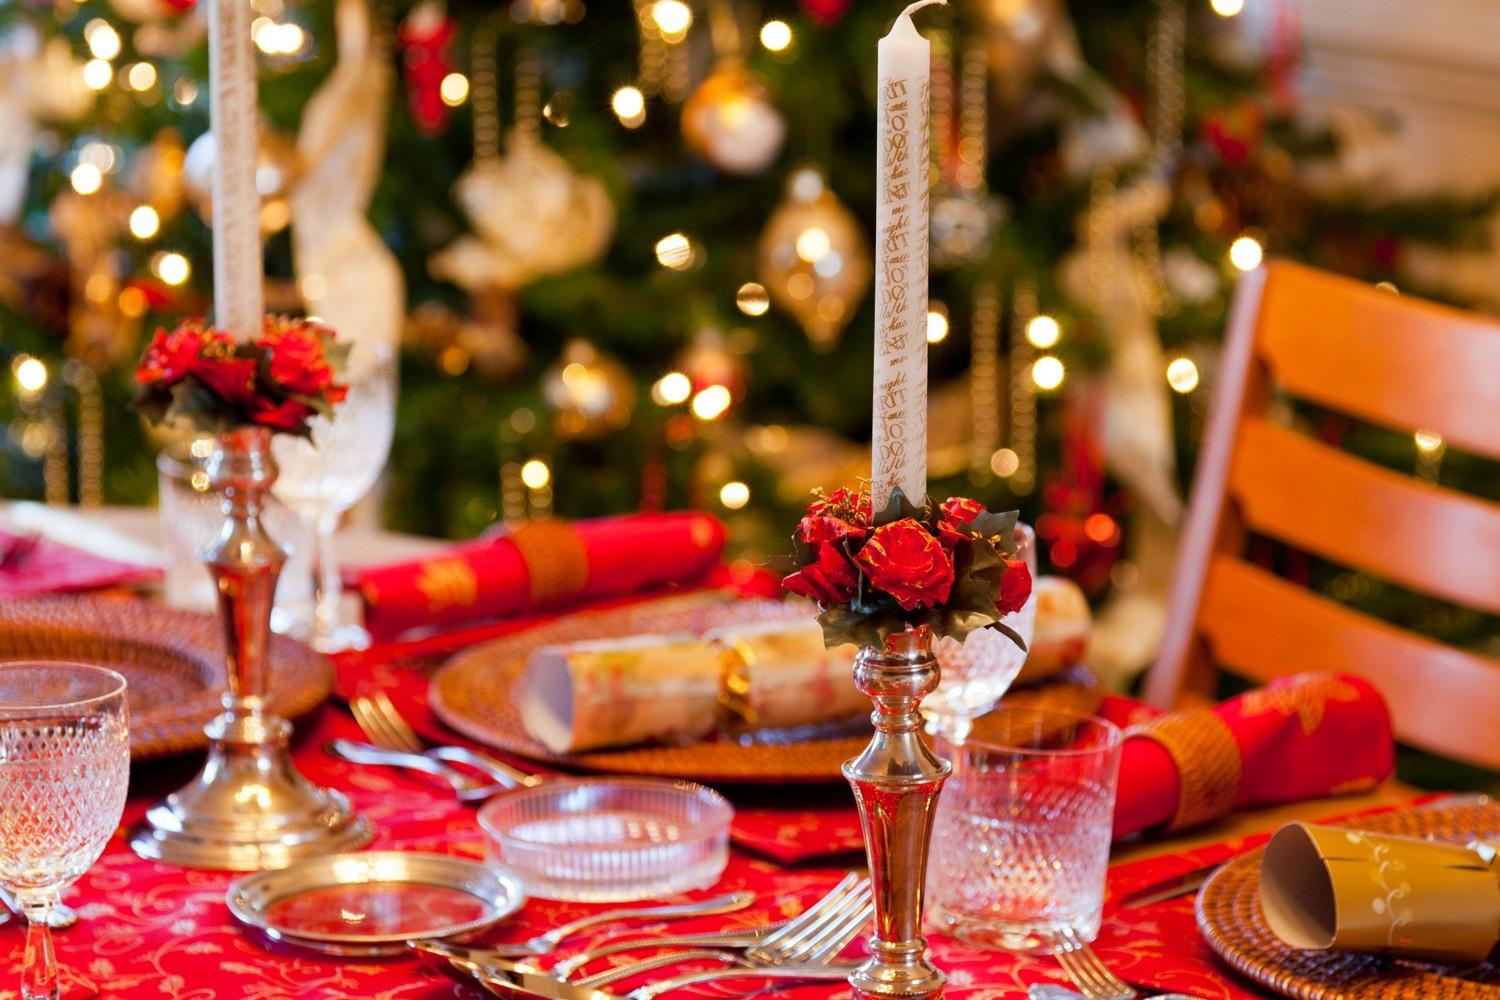  Natale, a tavola si spende in media 109 euro: tutti i piatti tipici regione per regione